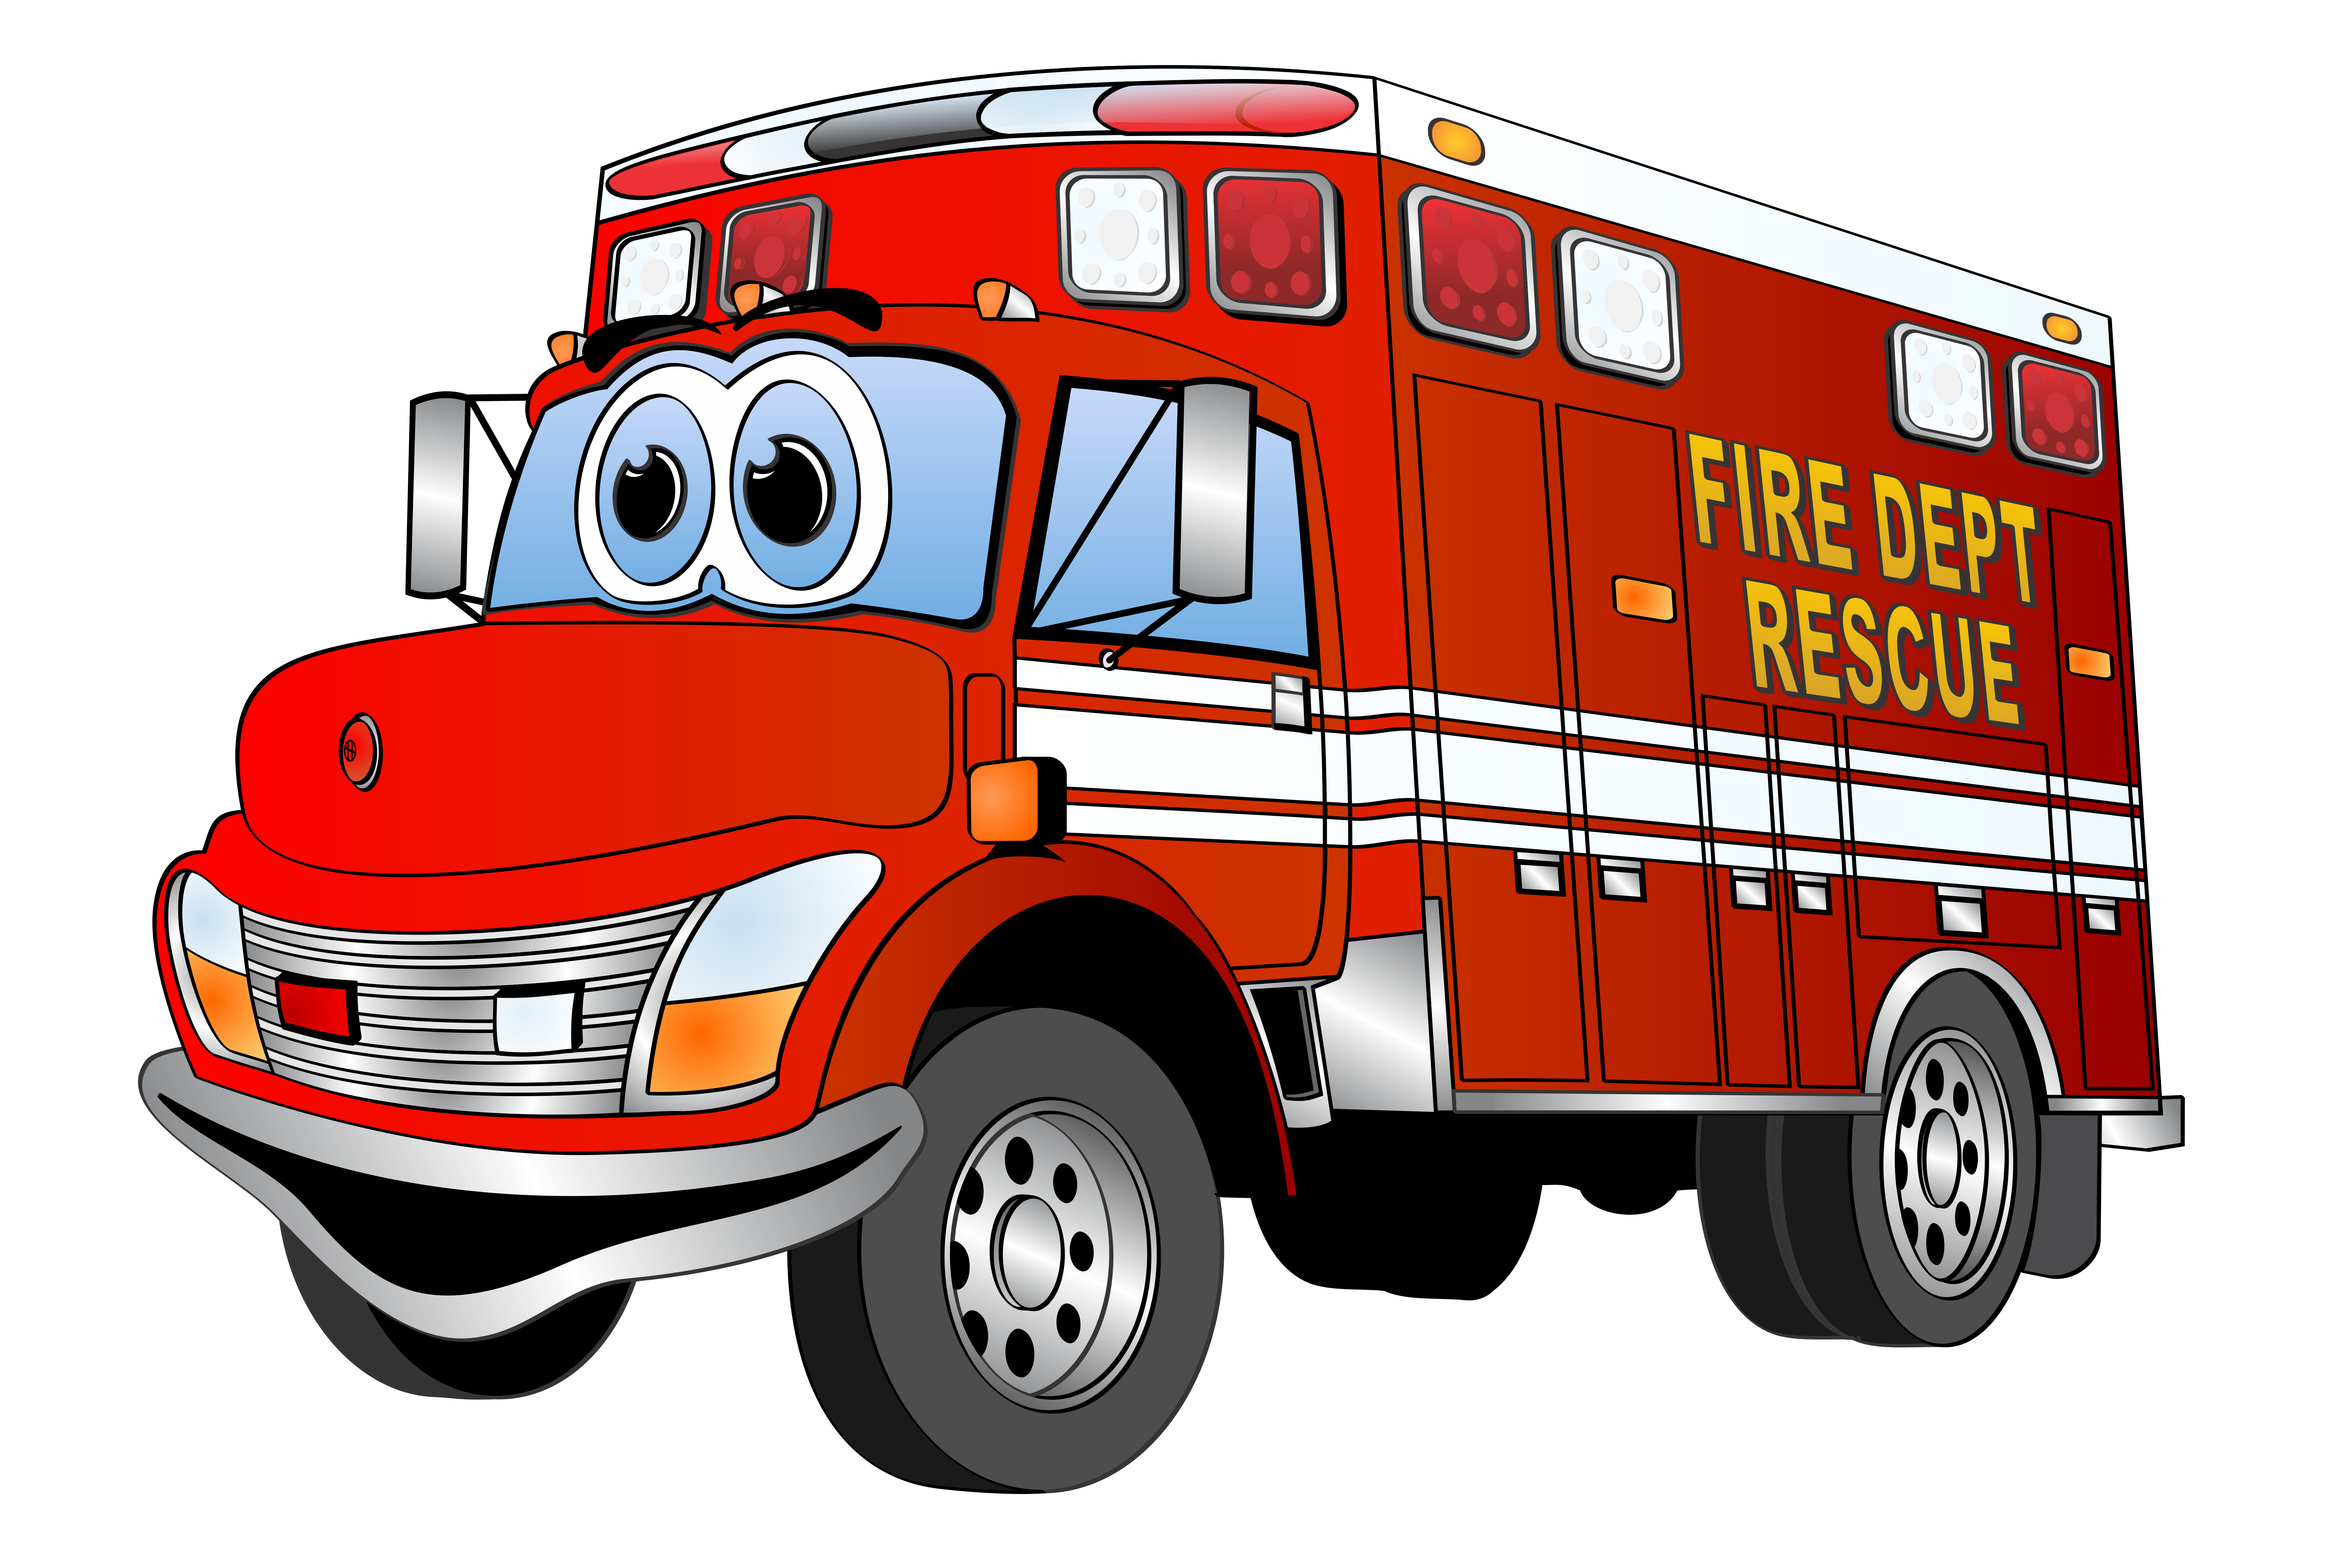 Animated fire truck clipart - ClipartFox